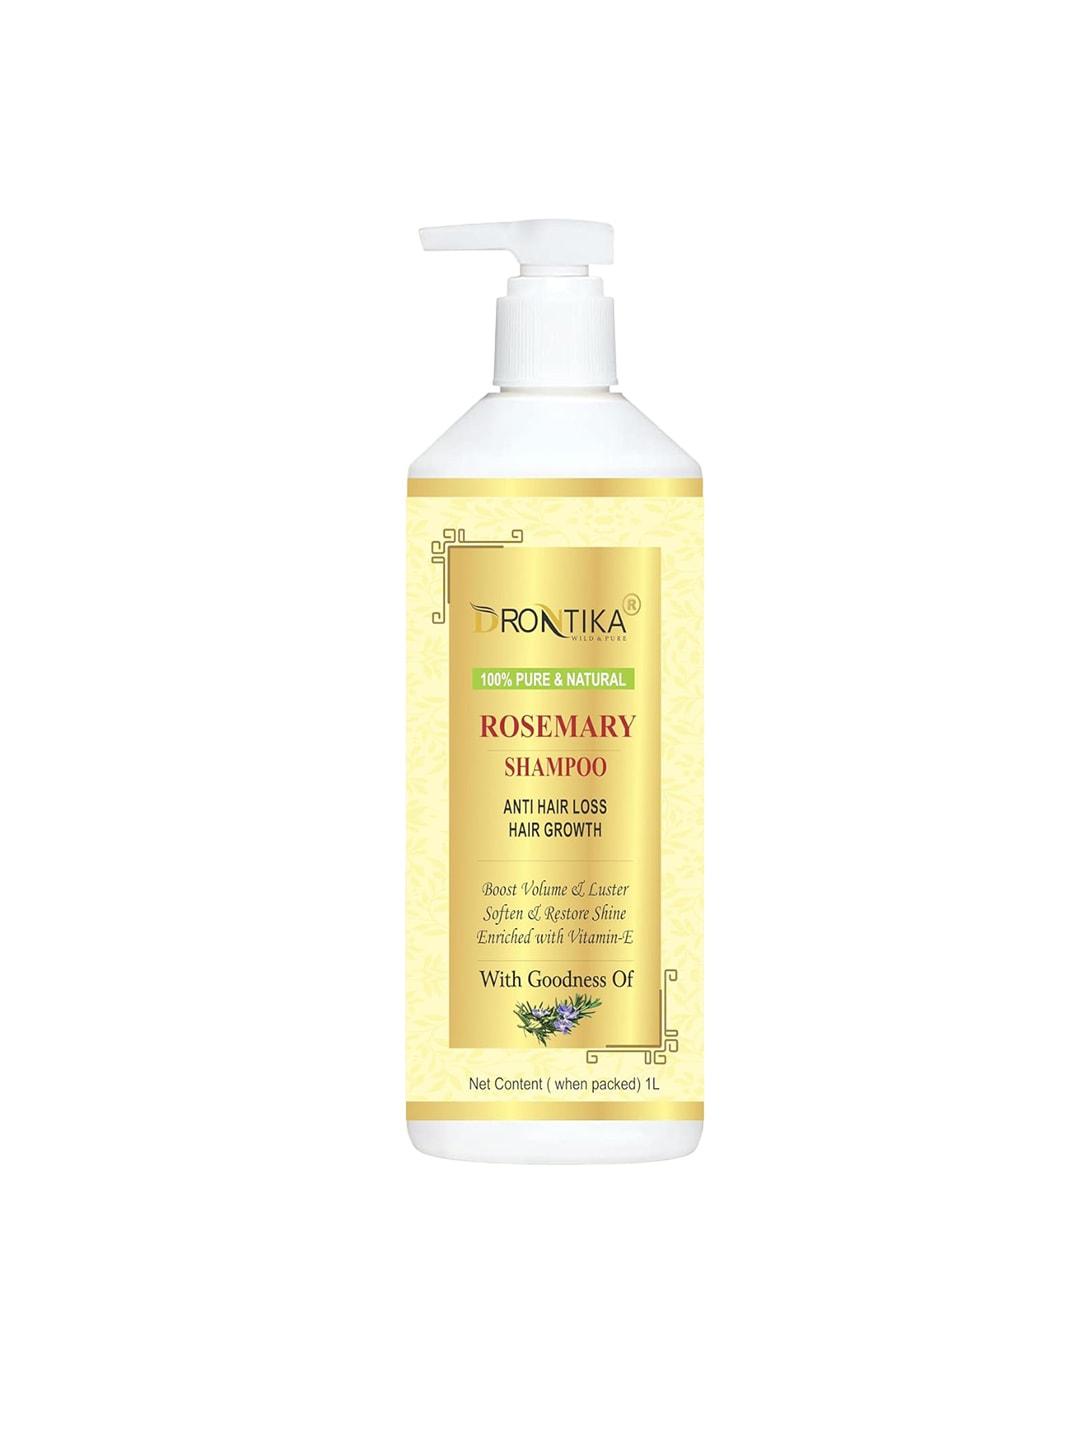 drontika pure & natural rosemary shampoo for anti hair loss & hair growth - 1l